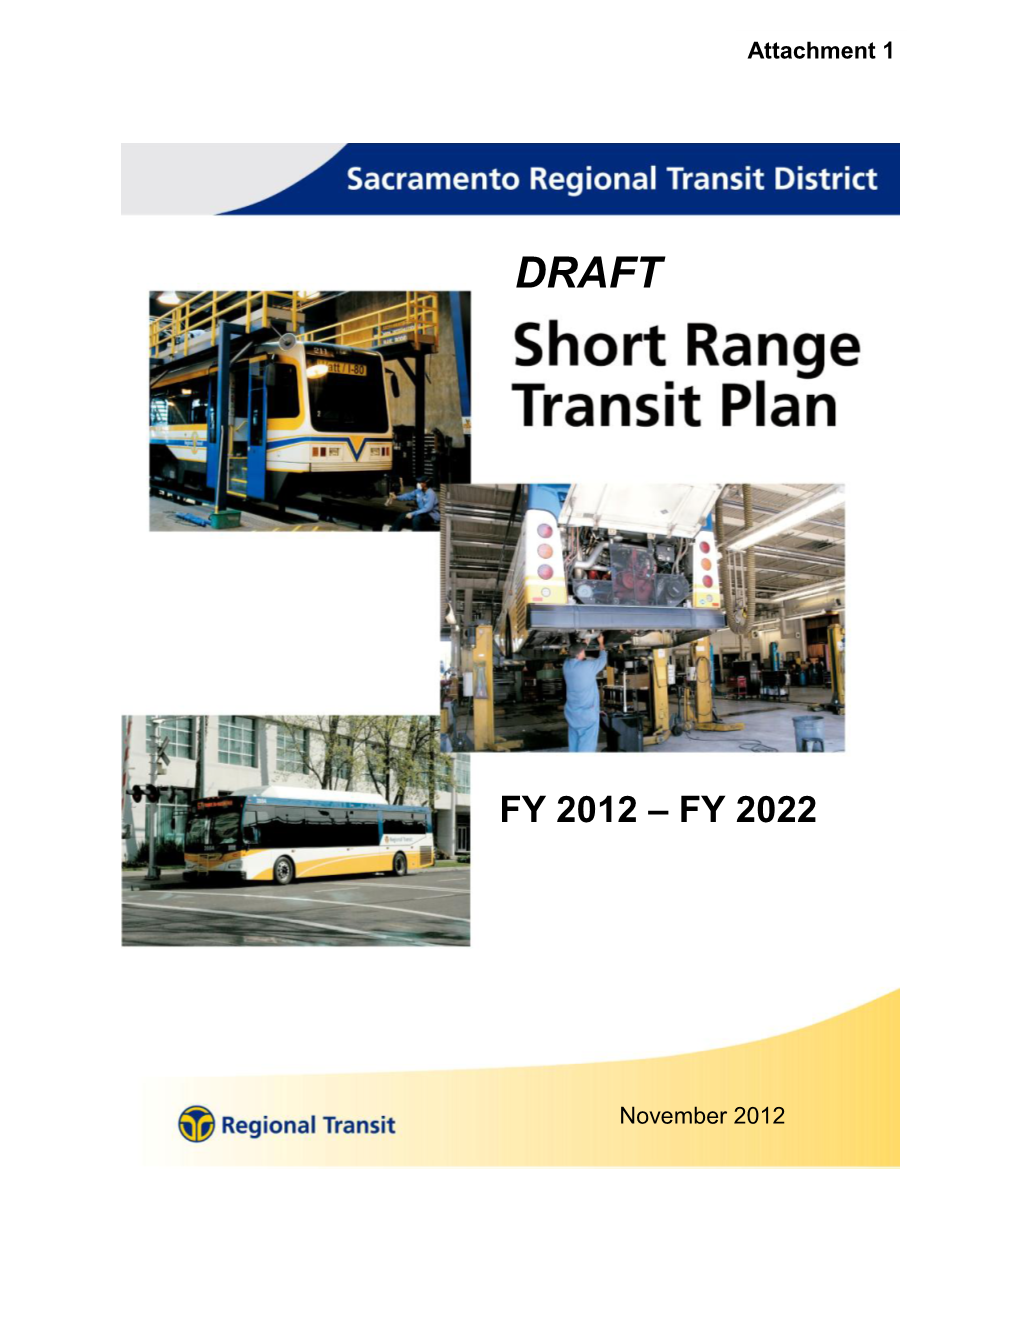 FY 2012 Short Range Transit Plan: FY 2012-2022